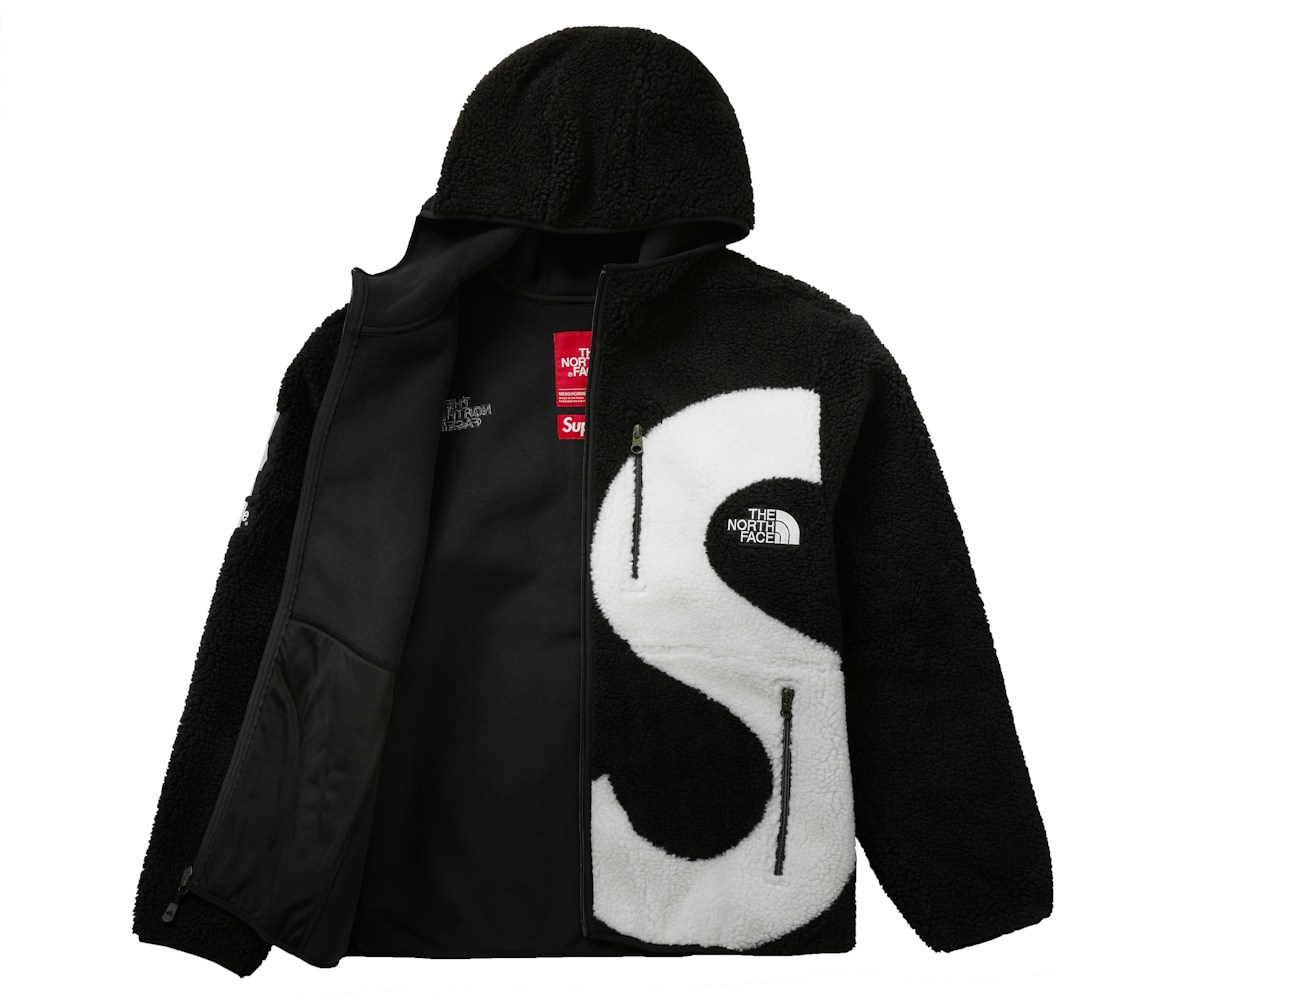 専用 Supreme Fleece jacket BLACK フリース 販売店舗限定 - www.rhusmann.de